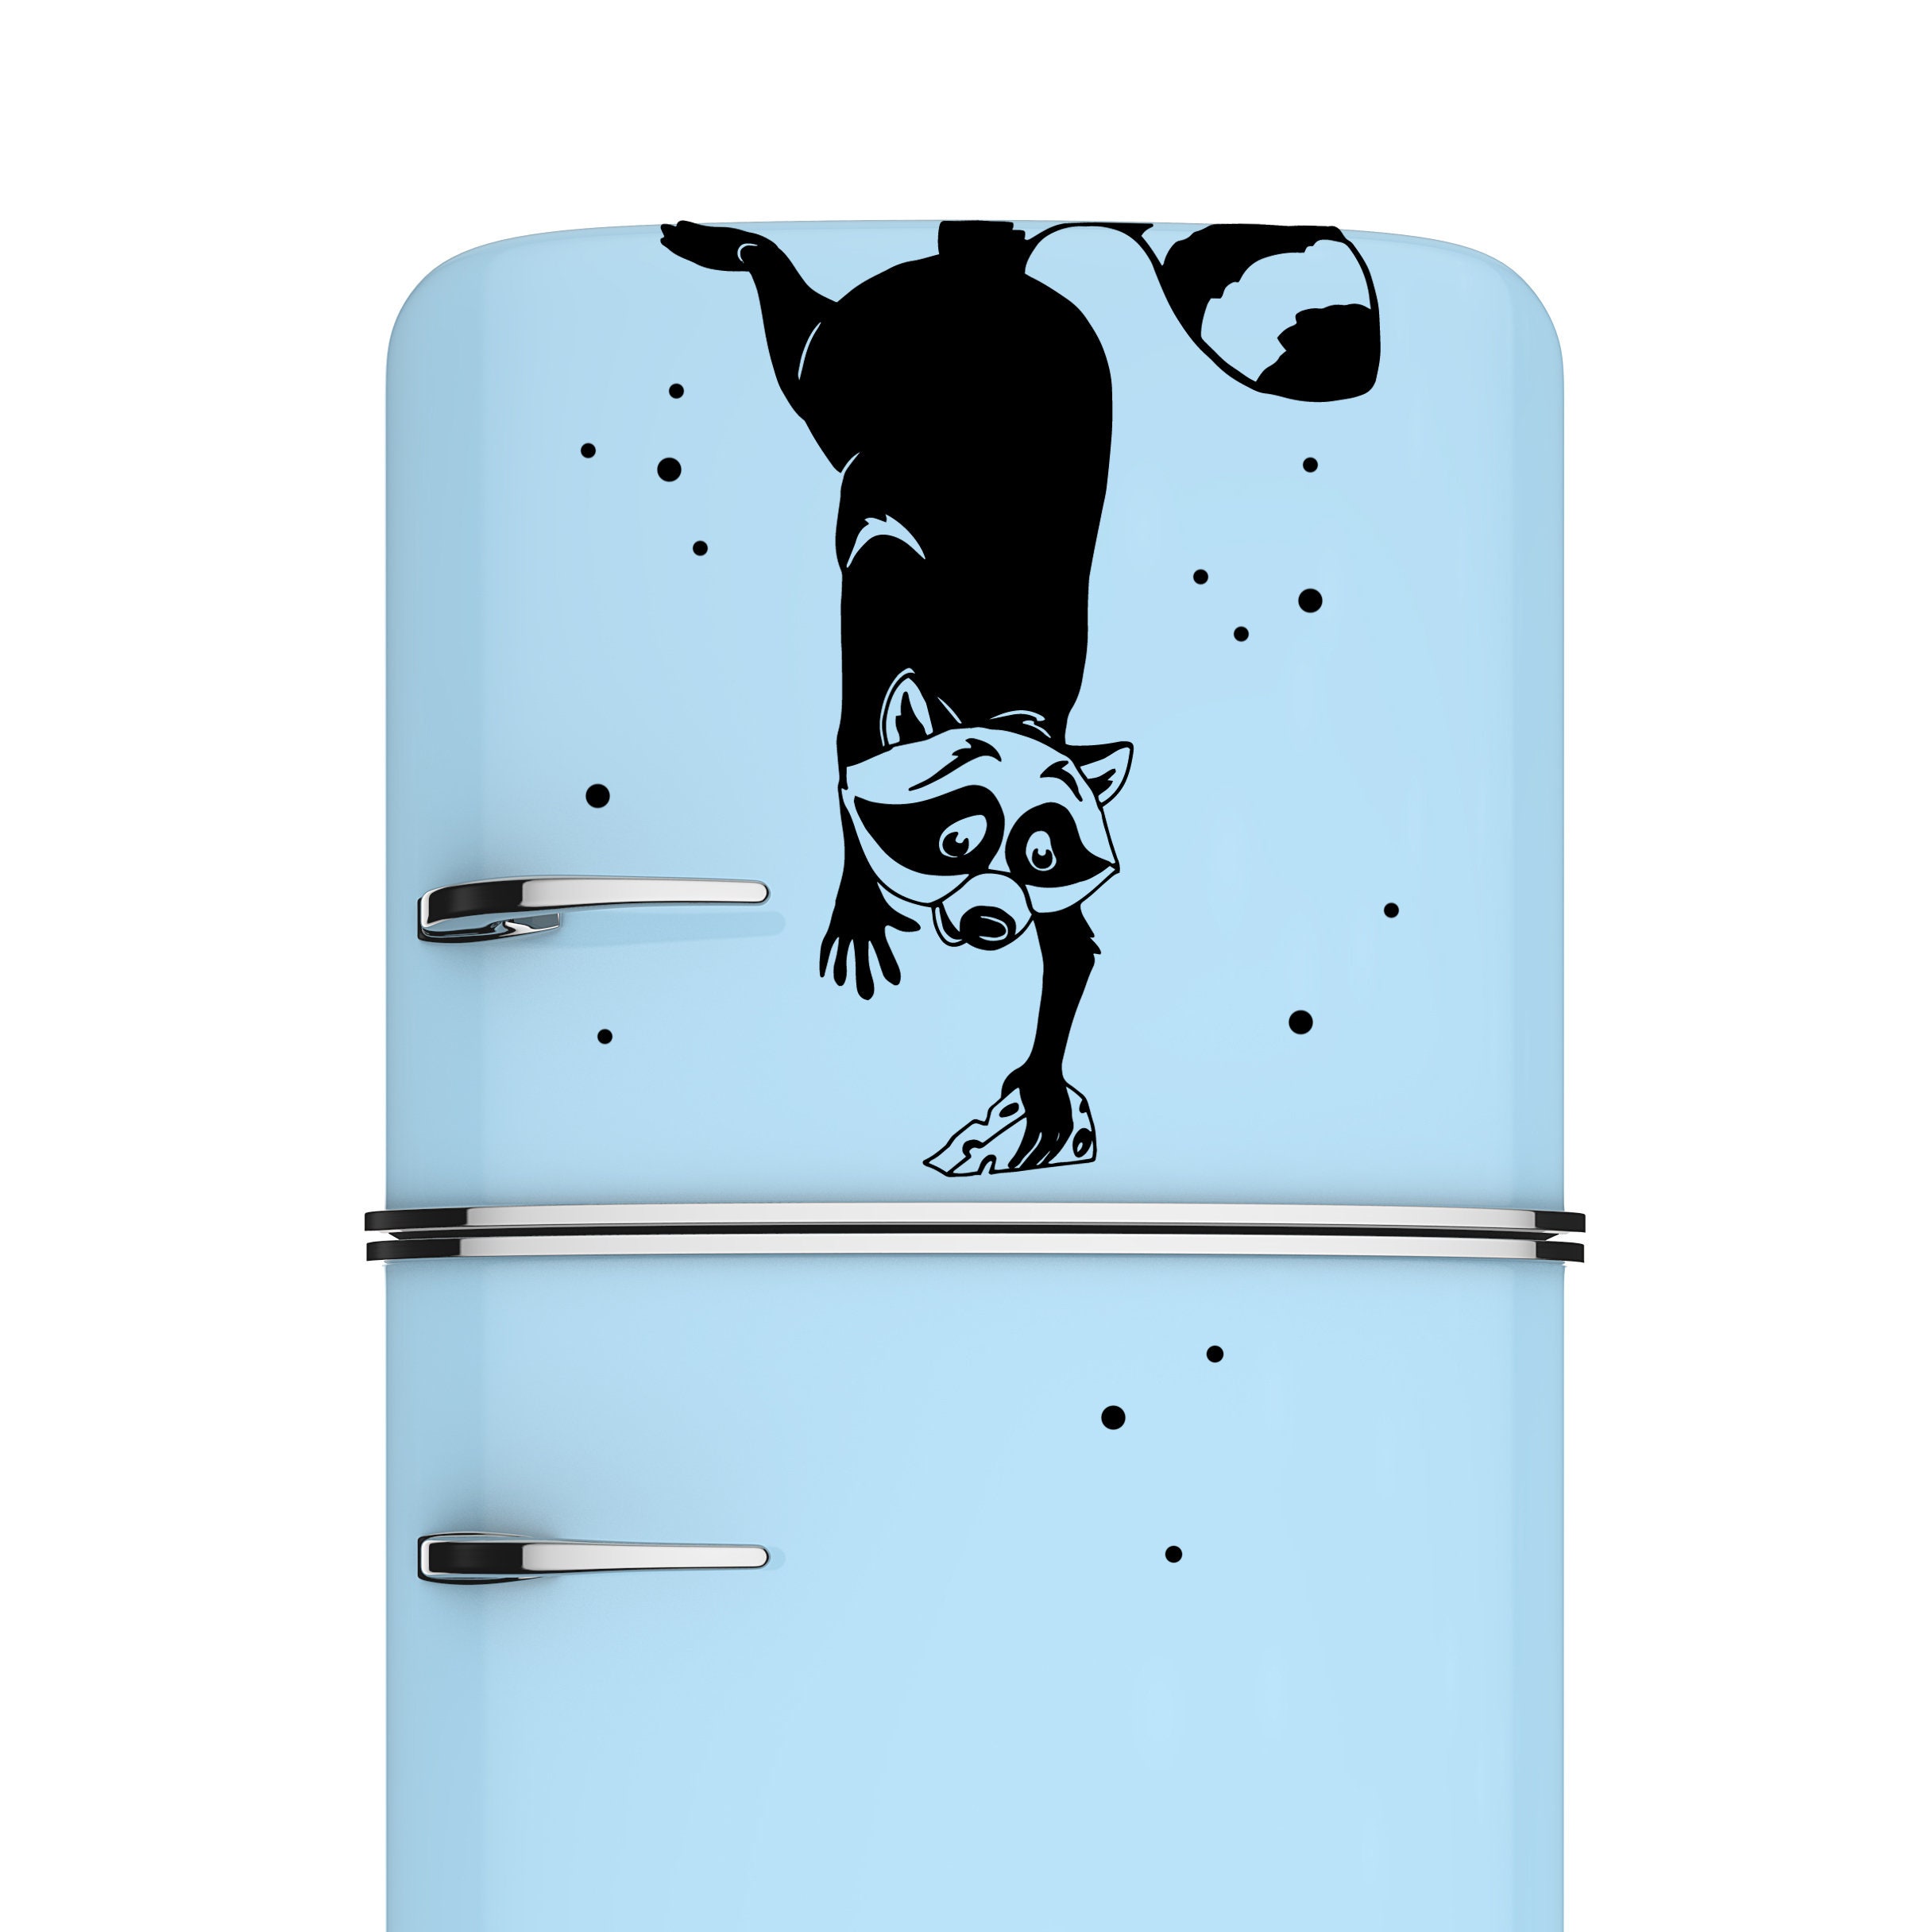 Kühlschrank Aufkleber,4 Blatt Mode Niedlich Aufkleber Kühlschrank  Wandaufkleber Aufkleber Kühlschrank Wandaufkleber Netter Entfernbar  Wandtattoos